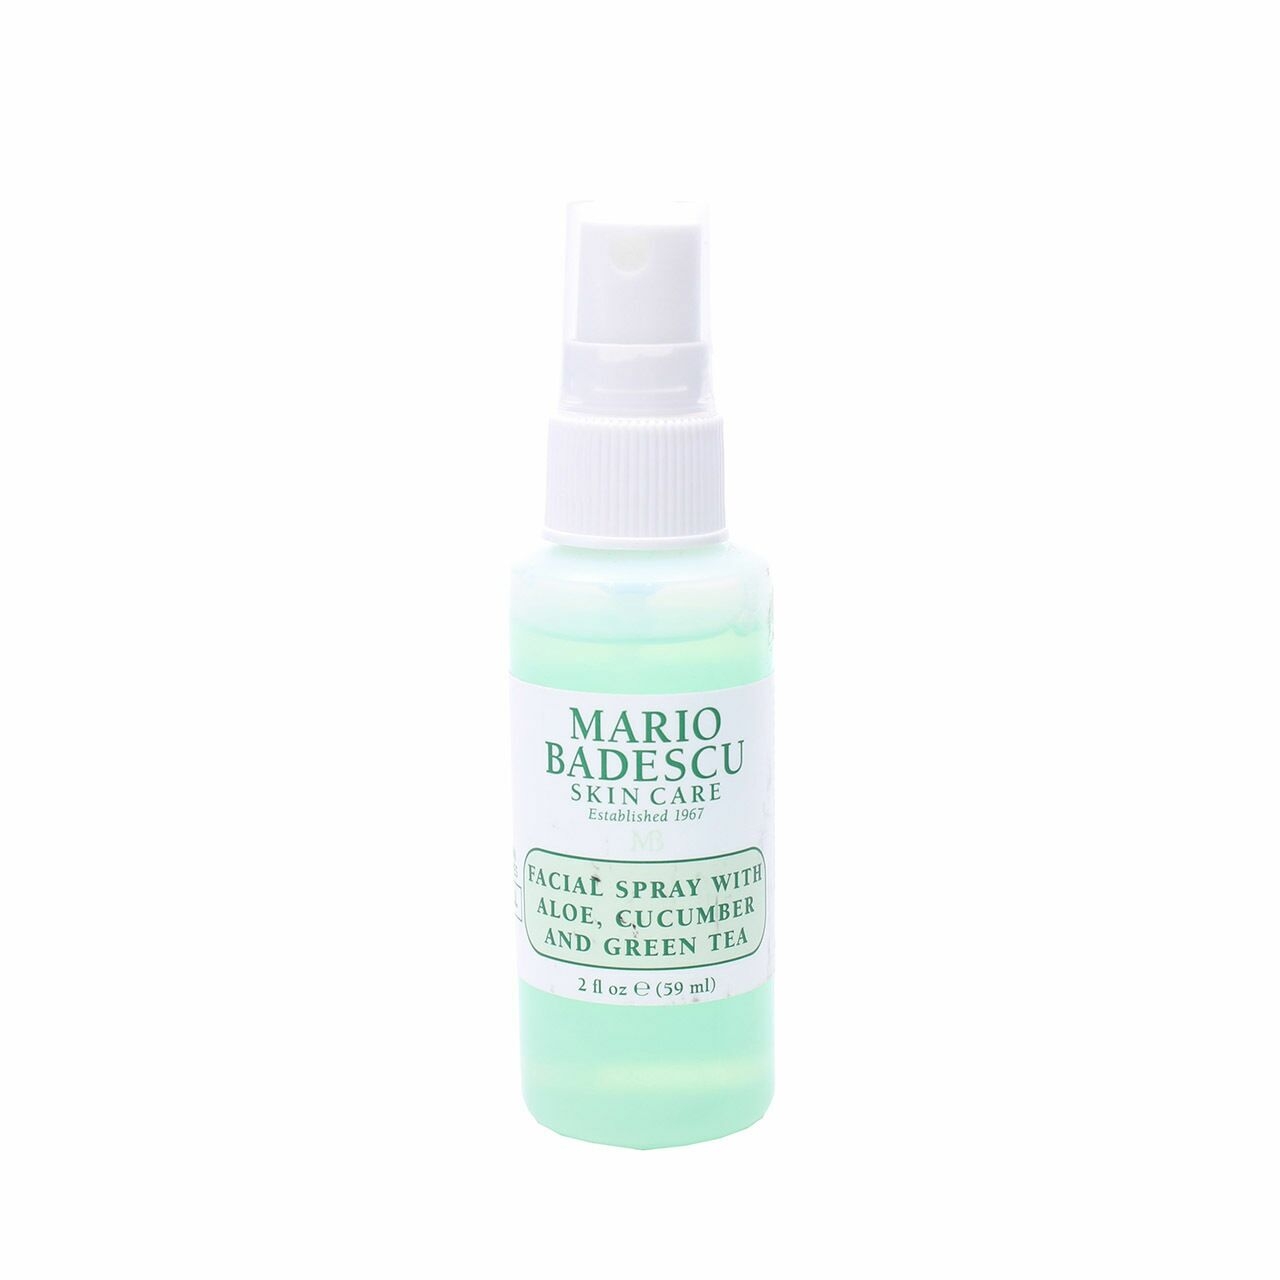 Mario Badescu Faceial Spray With Aloe, Cucumber And Green Tea Skin Care